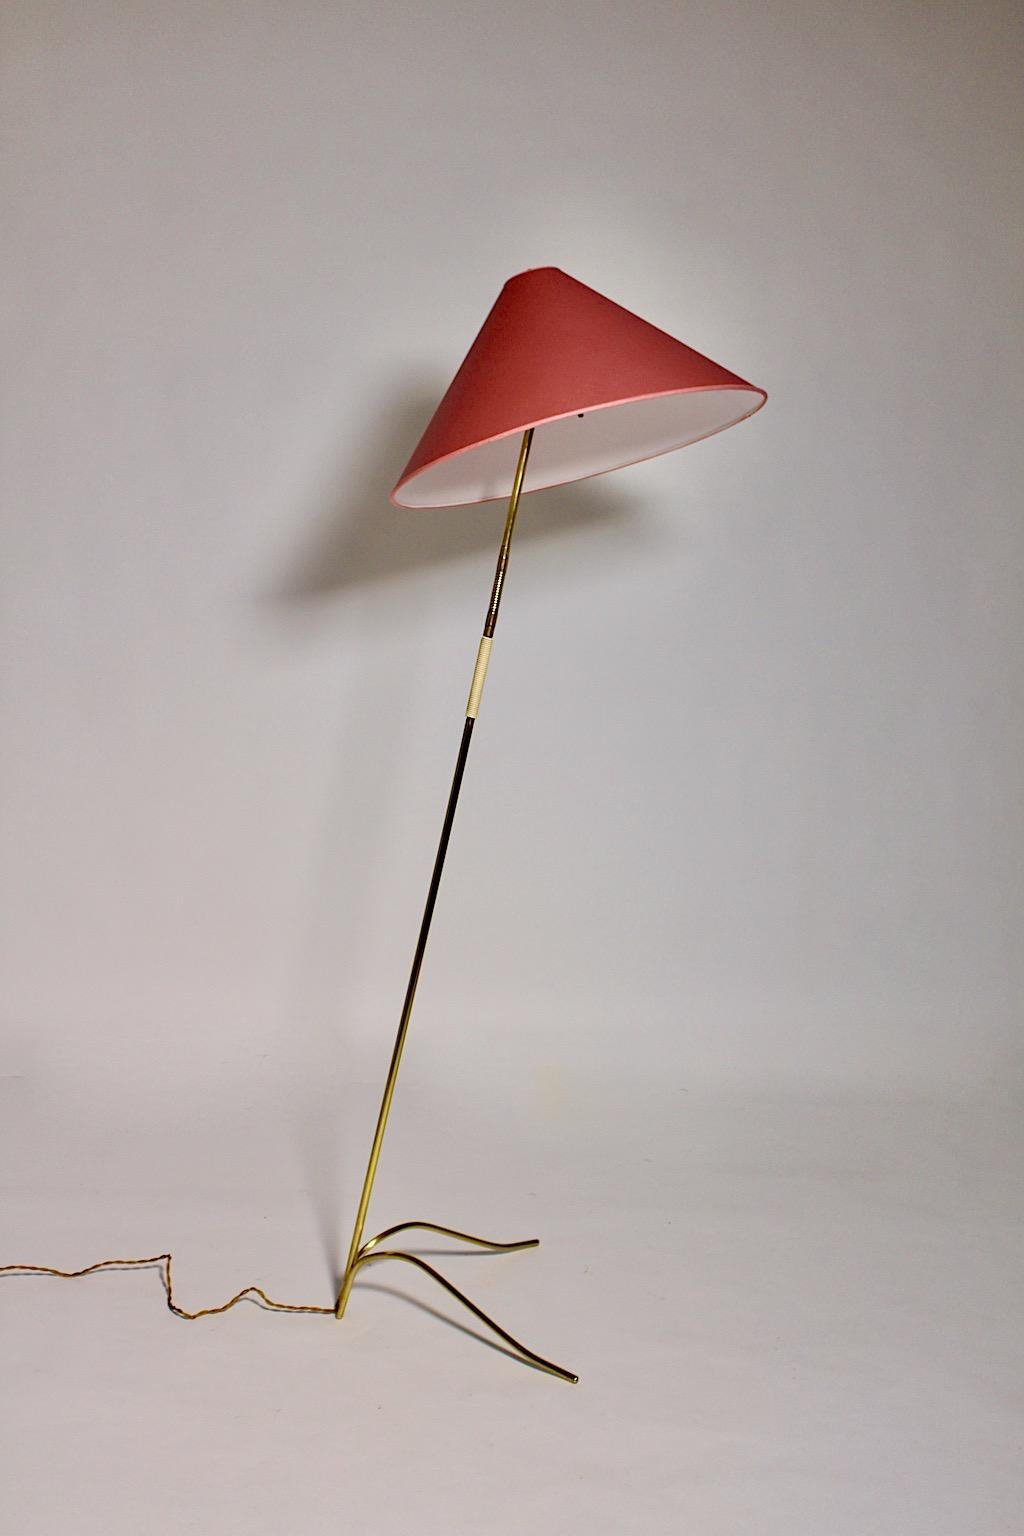 Brass Vintage Mid-Century Modern Splayfoot Floor Lamp Rupert Nikoll 1950 Austria For Sale 4